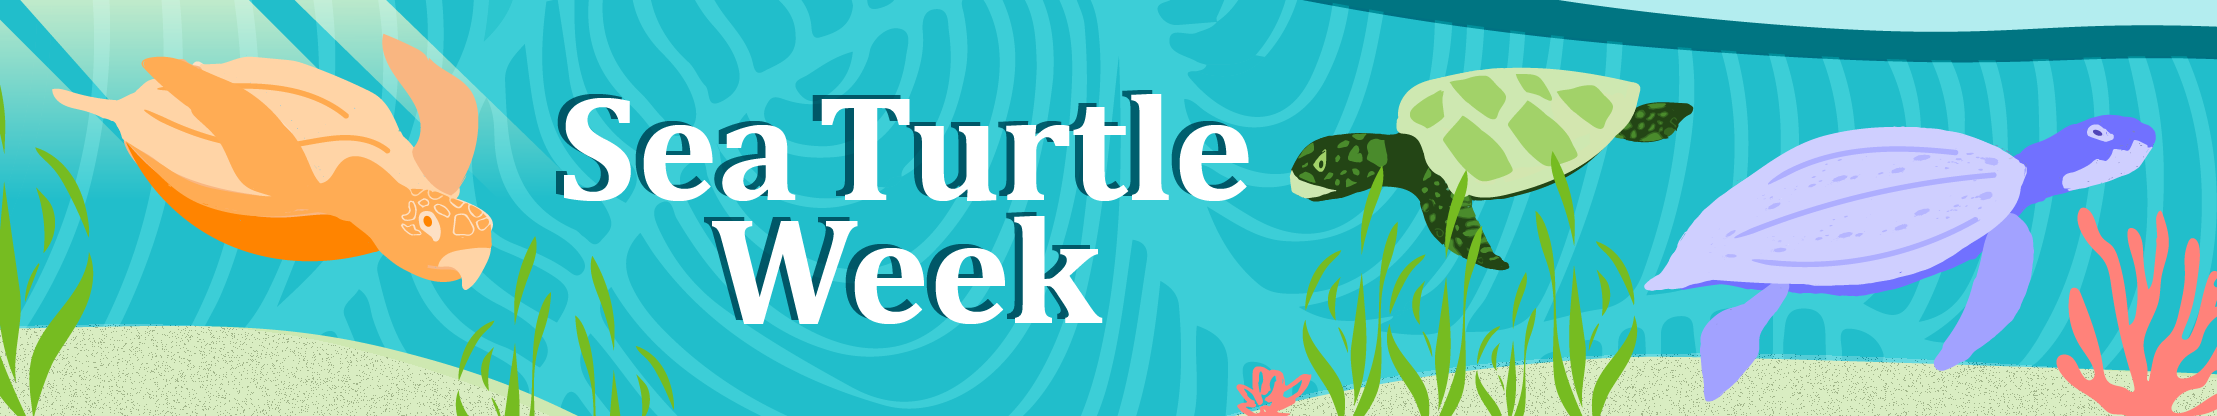 Illustrated swimming sea turtles on banner for Sea Turtle Week 